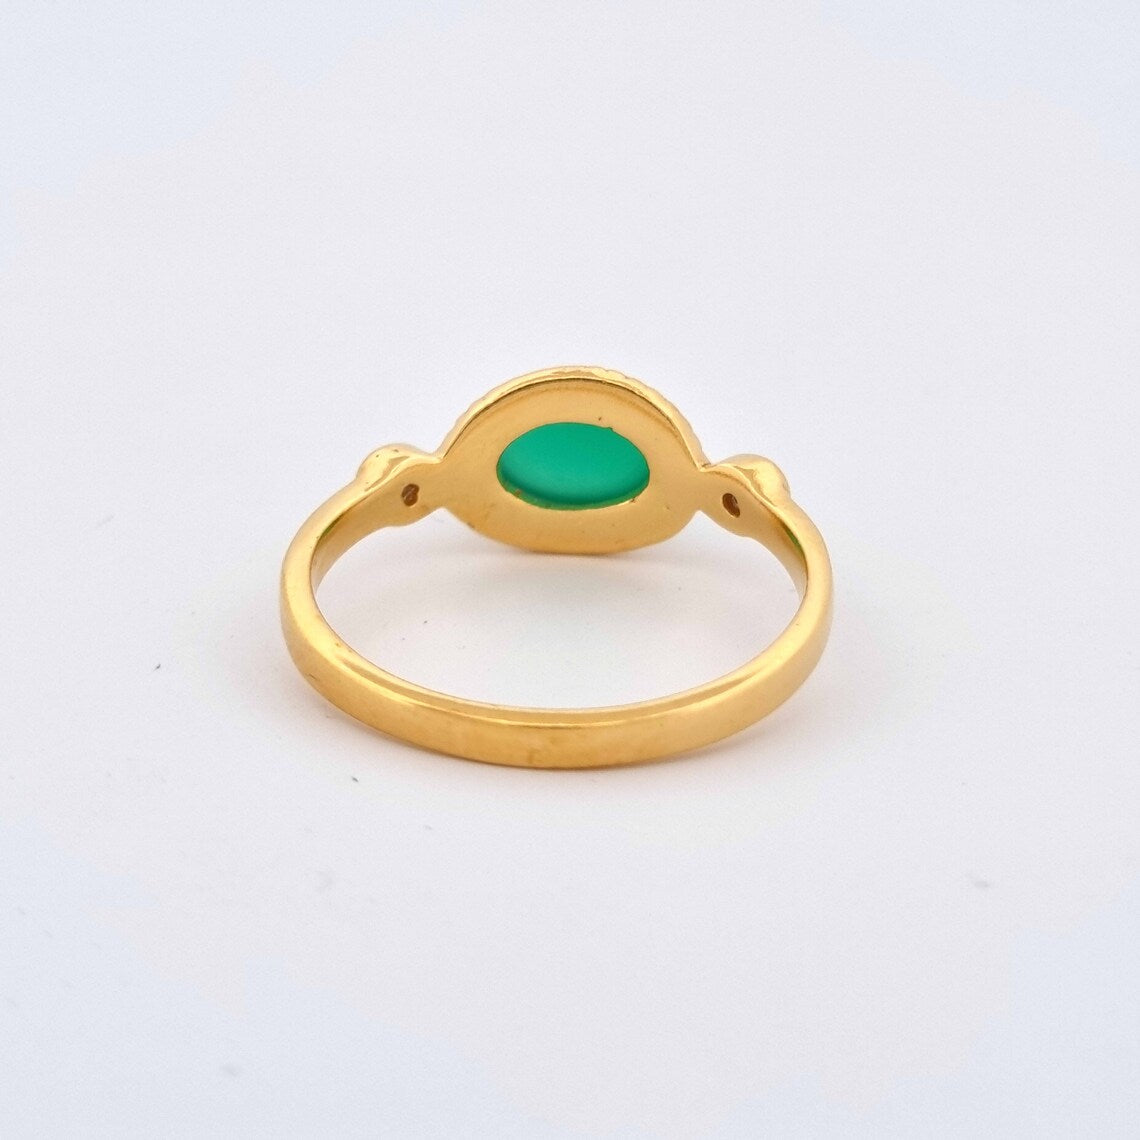 Green Onyx Ring - Green Oval Onyx ring - CZ & green onyx Oval Cabochon ring - Gold Green Onyx Ring Handmade